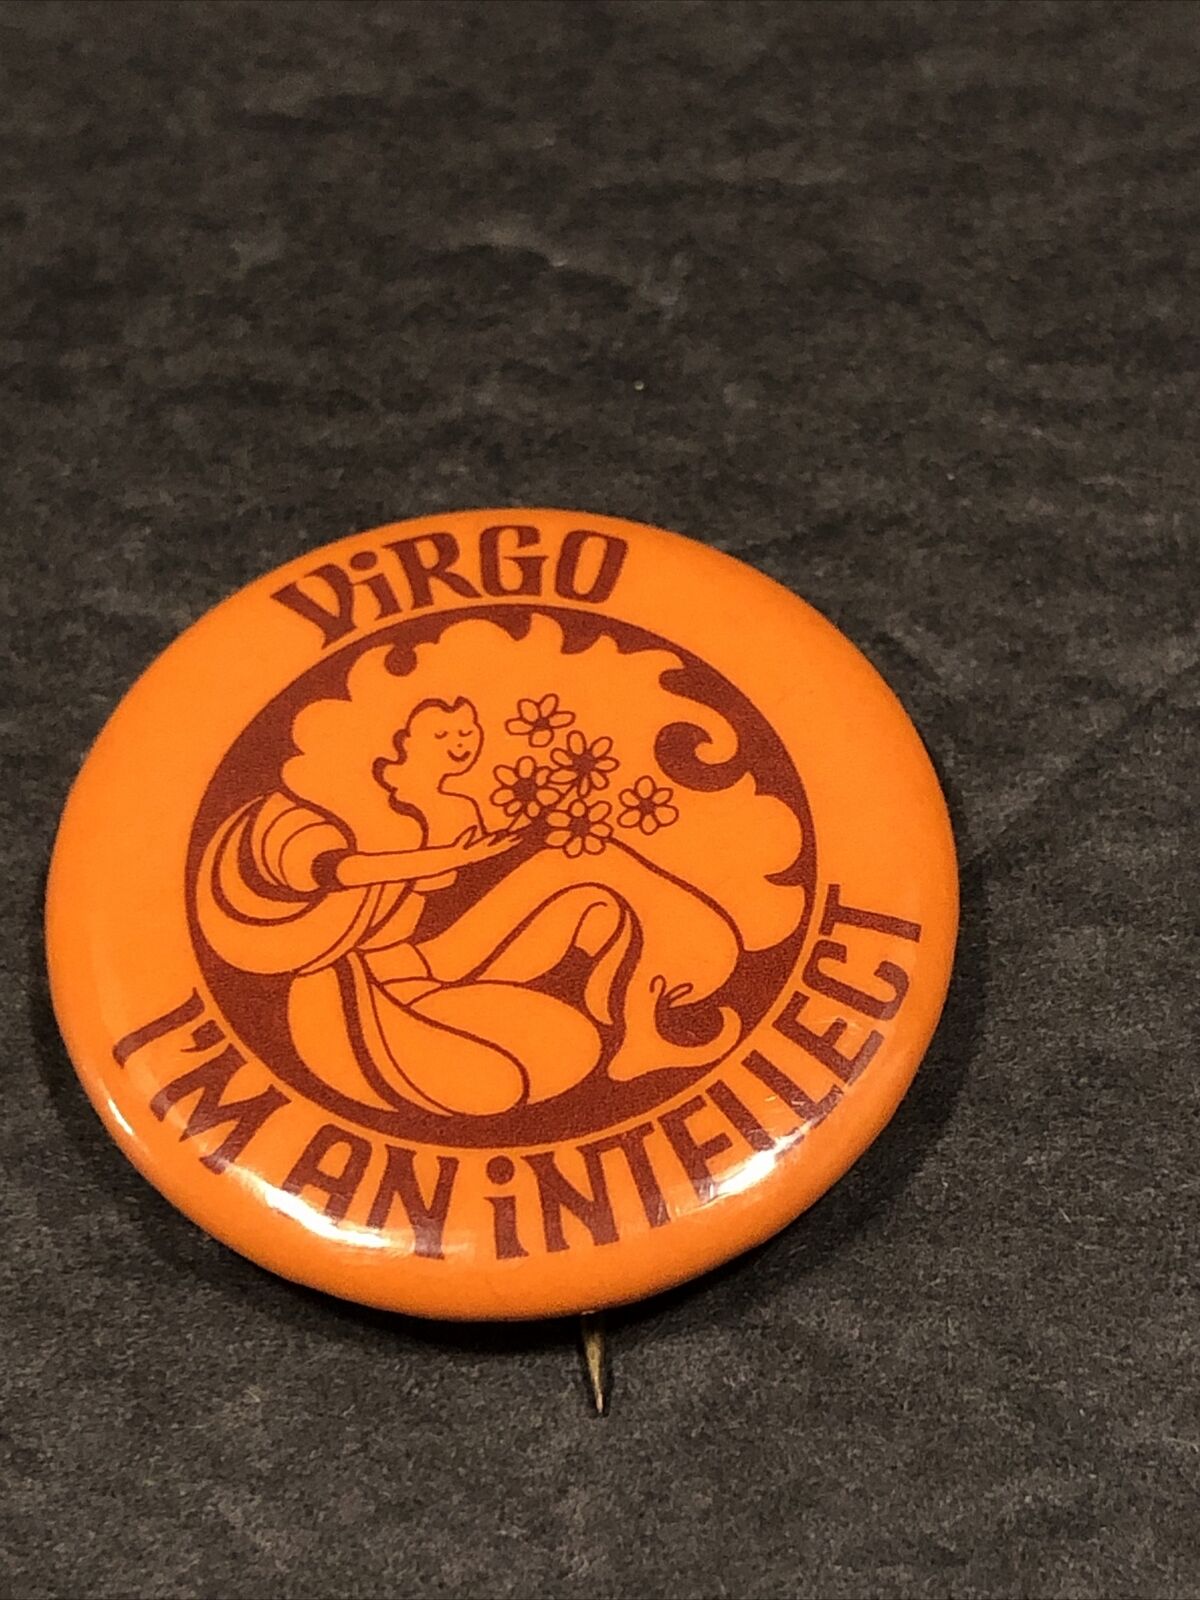 Zodiac Vintage Button Pin Badge - Virgo I\'m an Intellect - 1970s 1 1/4 inch